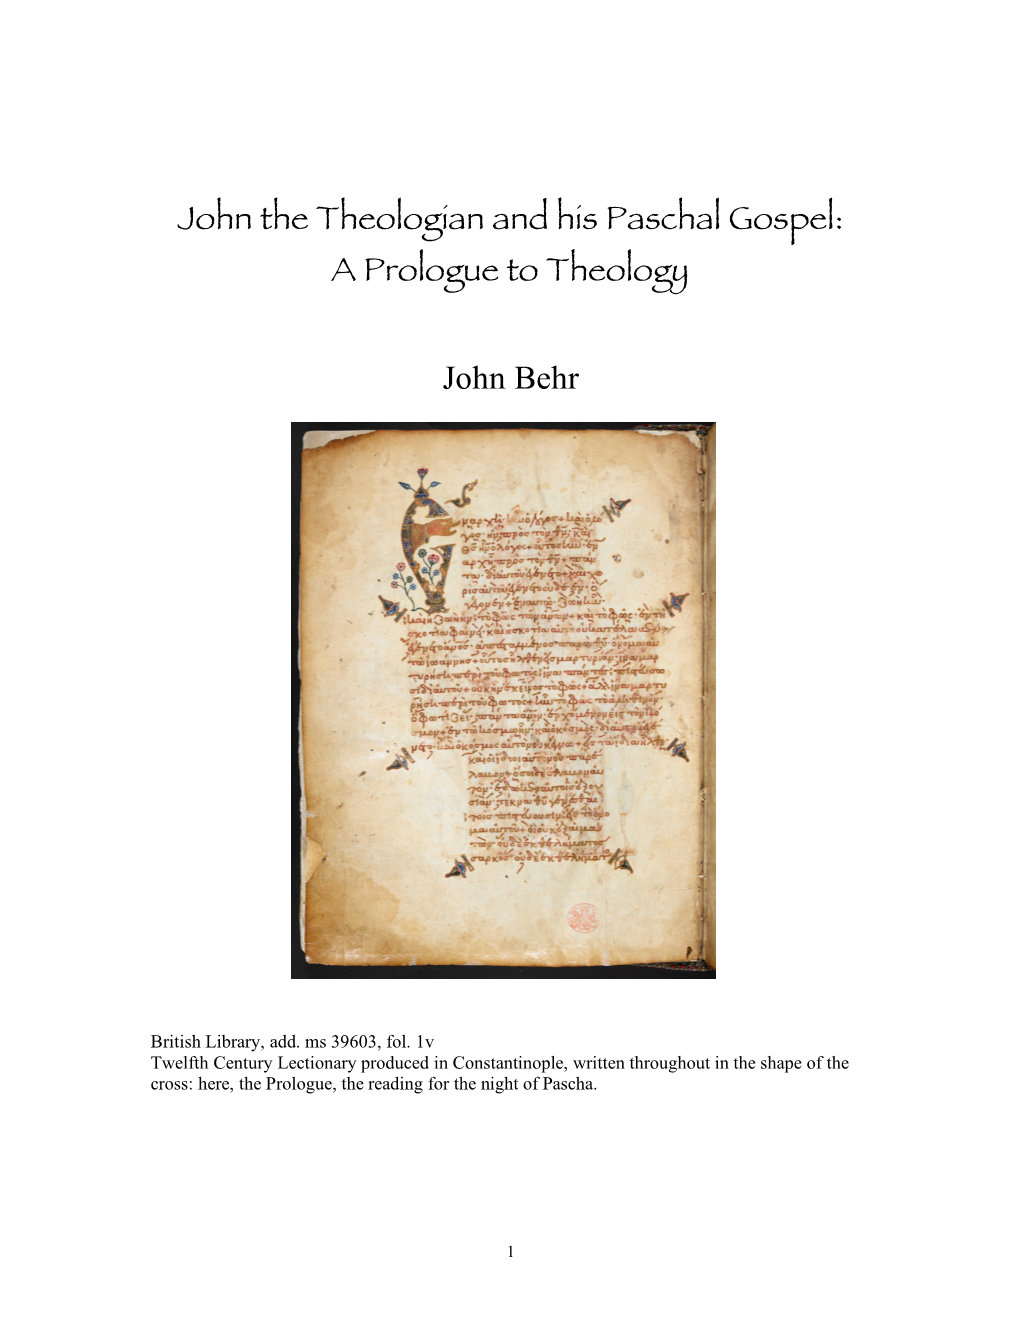 John the Theologian and His Paschal Gospel: a Prologue to Theology John Behr